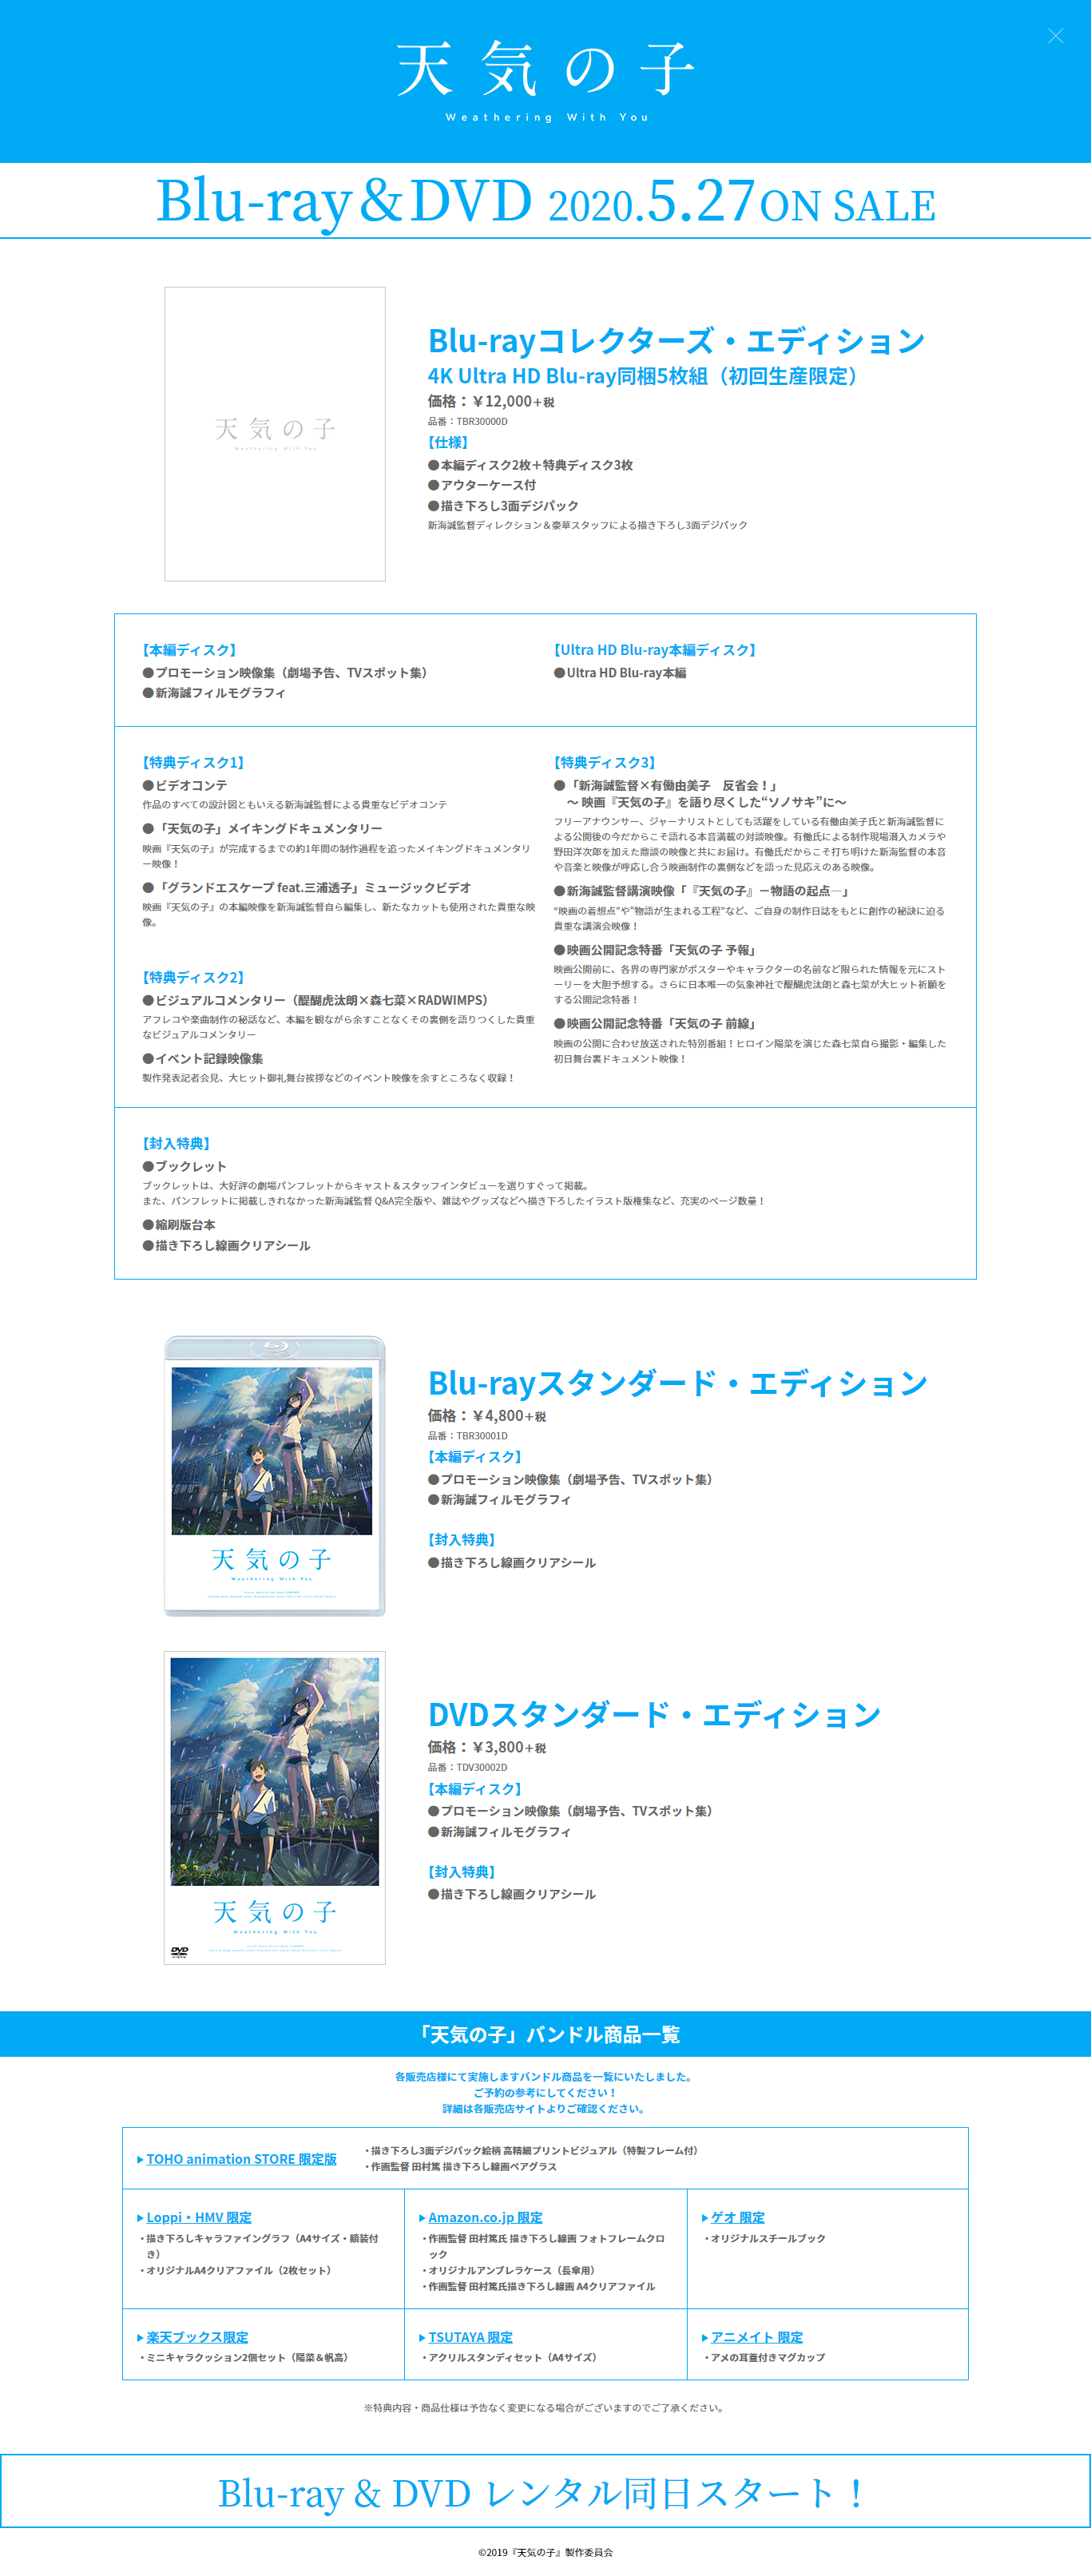 Blu-ray＆DVD 2020.5.27 ON SALE 映画『天気の子』公式サイト - tenkinoko.com.jpg.jpg